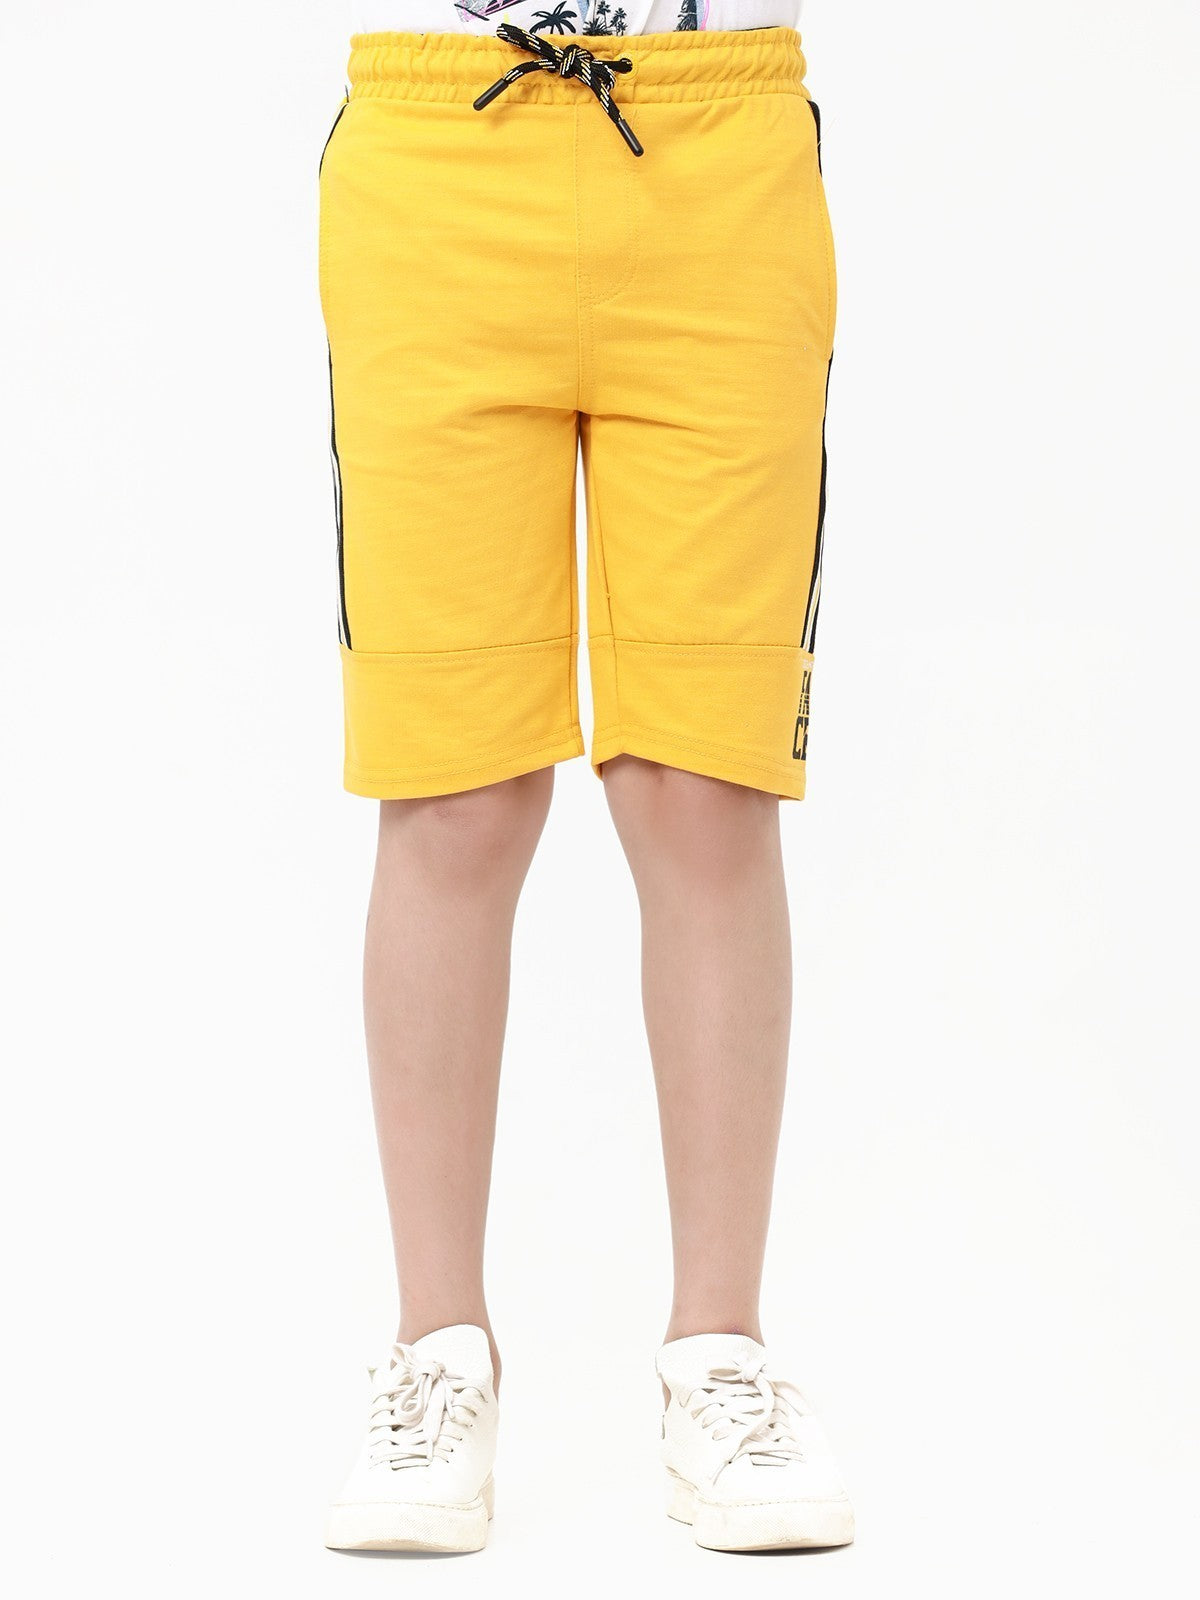 Boy's Yellow Shorts - EBBSK23-016